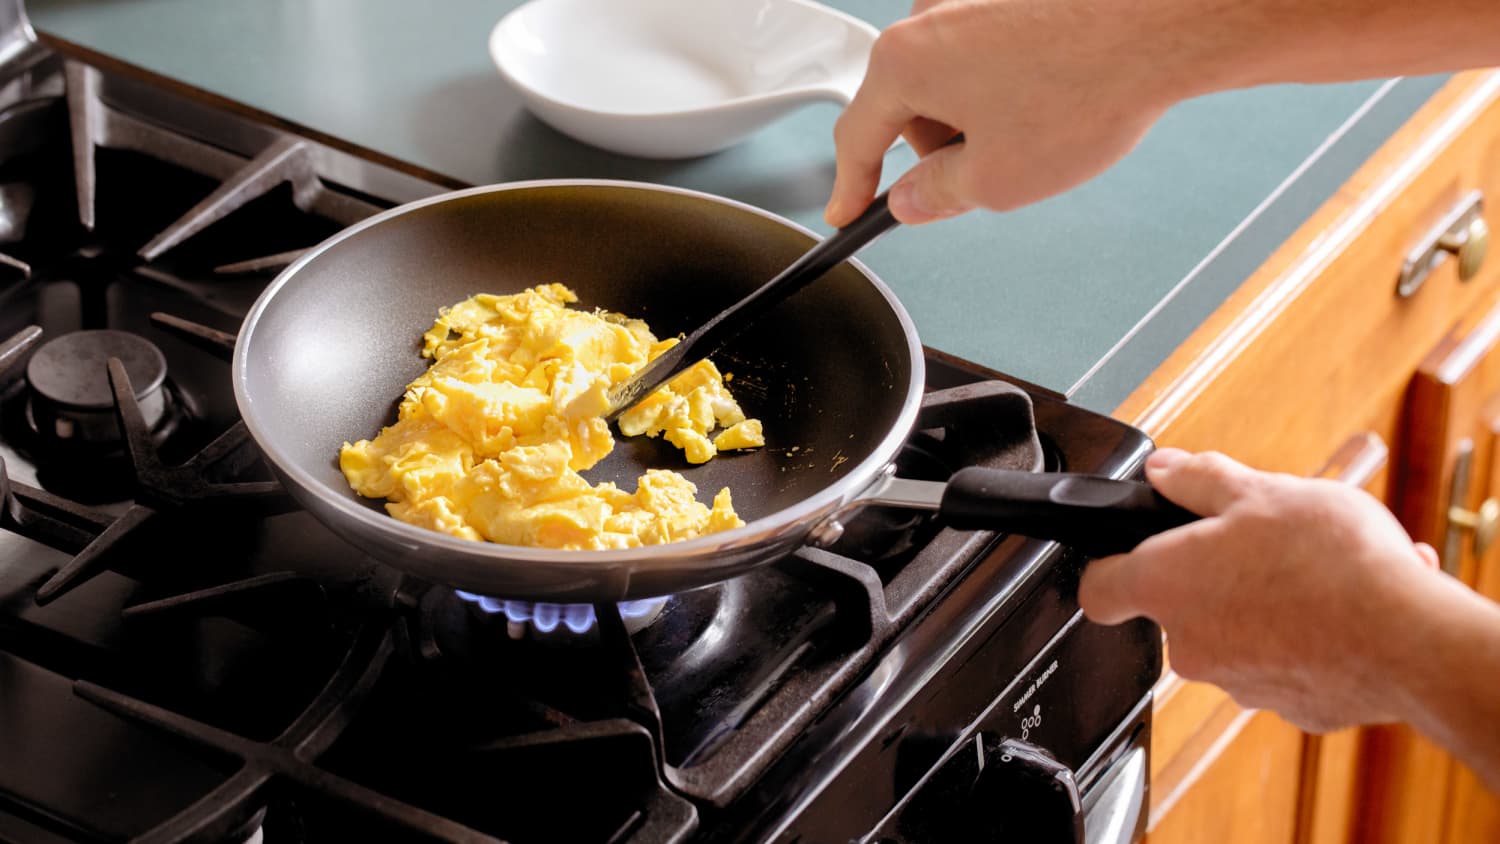 Nonstick Small Frying Pan Skillet 6 Egg Pan Omelet Pan, Non Stick